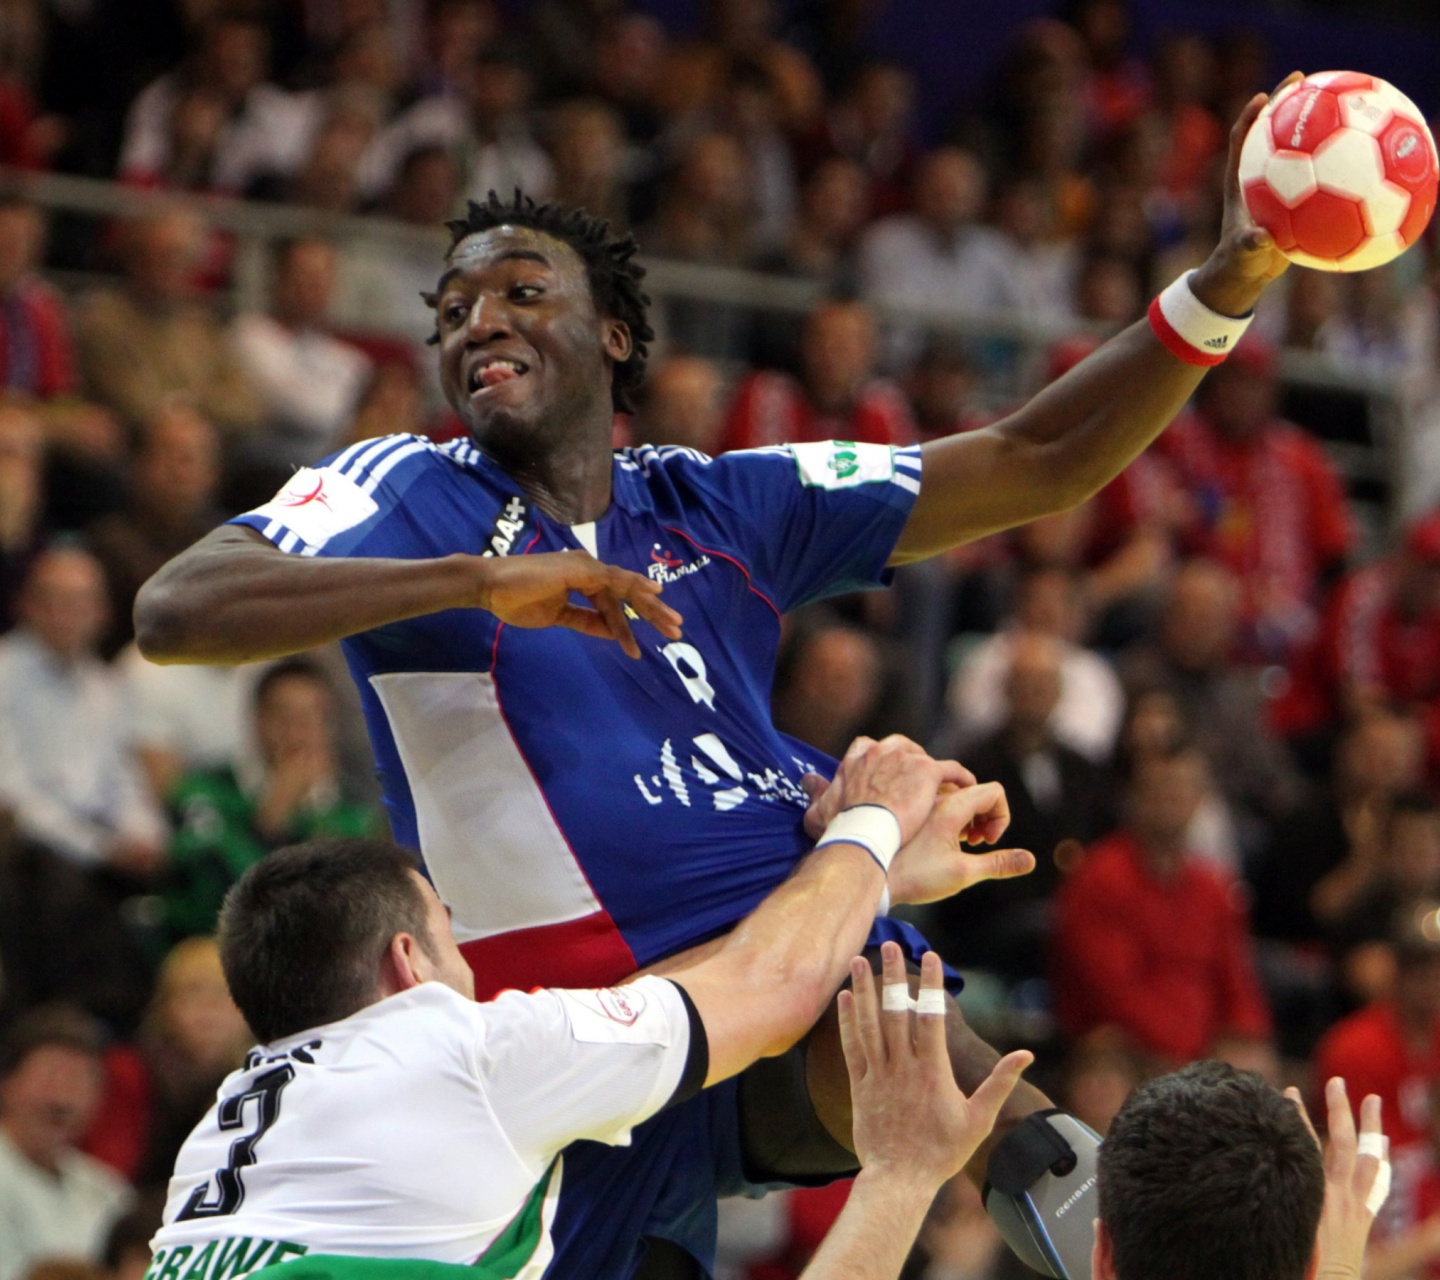 Handball Match - France Vs Hungary